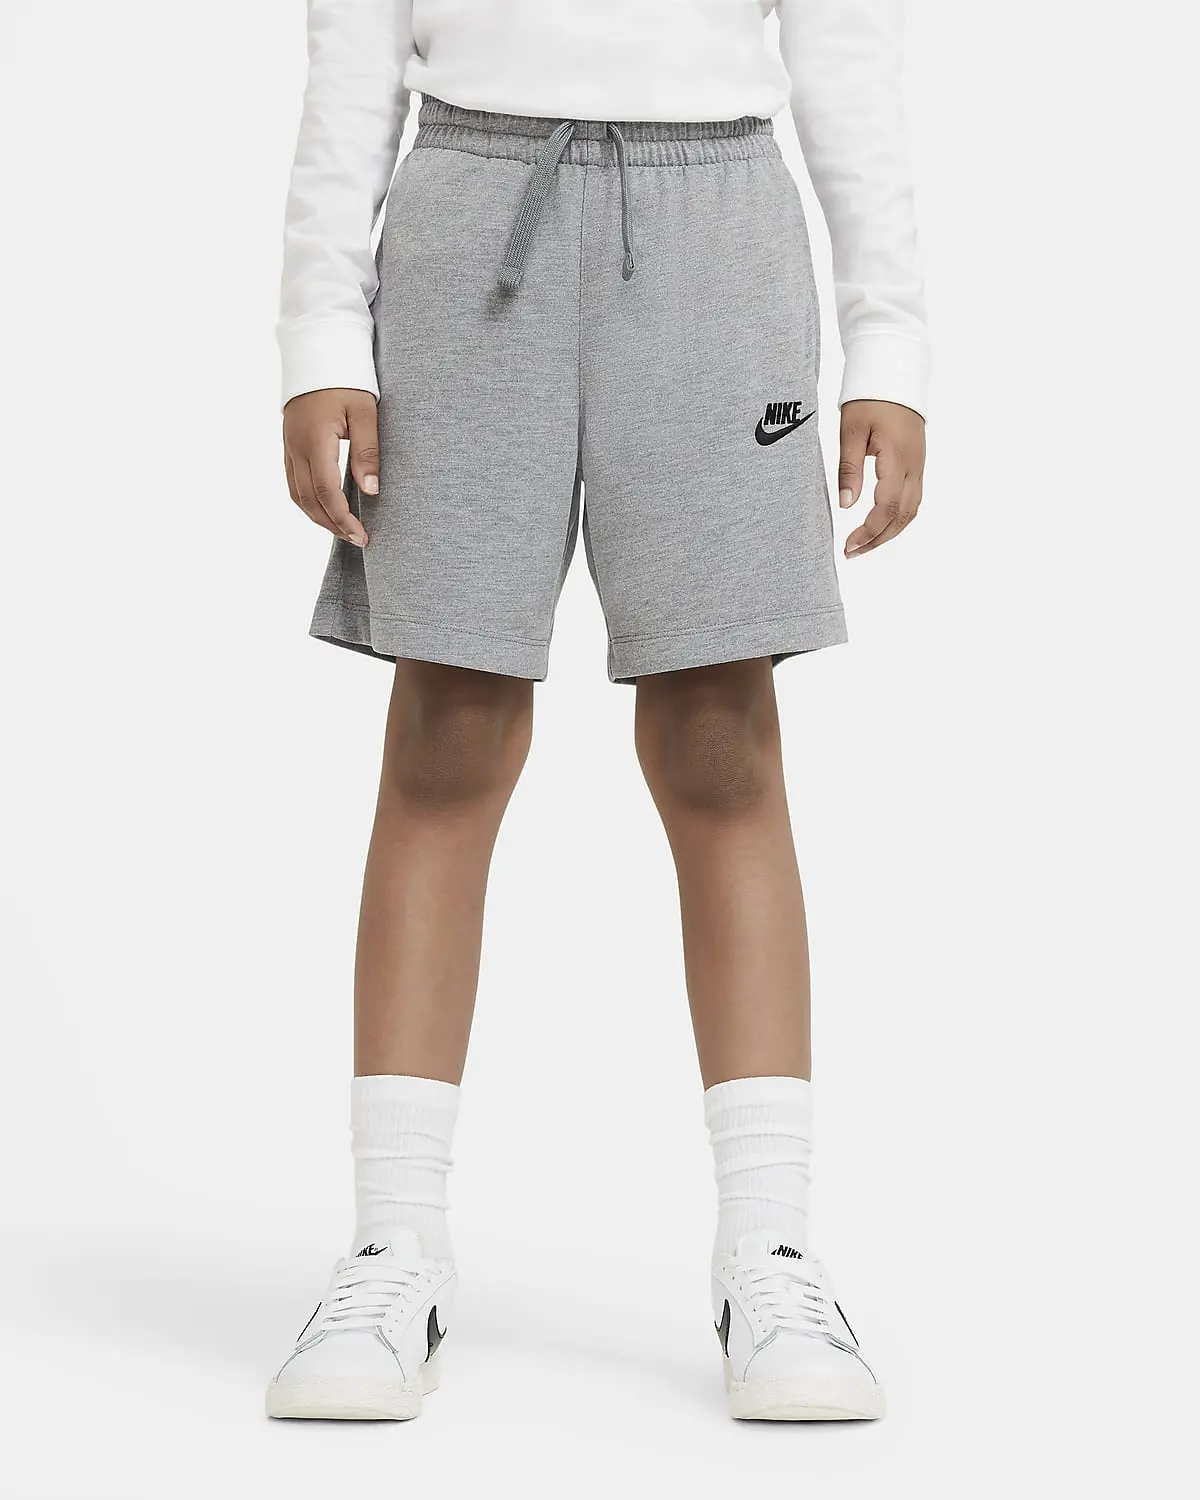 Nike Jersey. 1